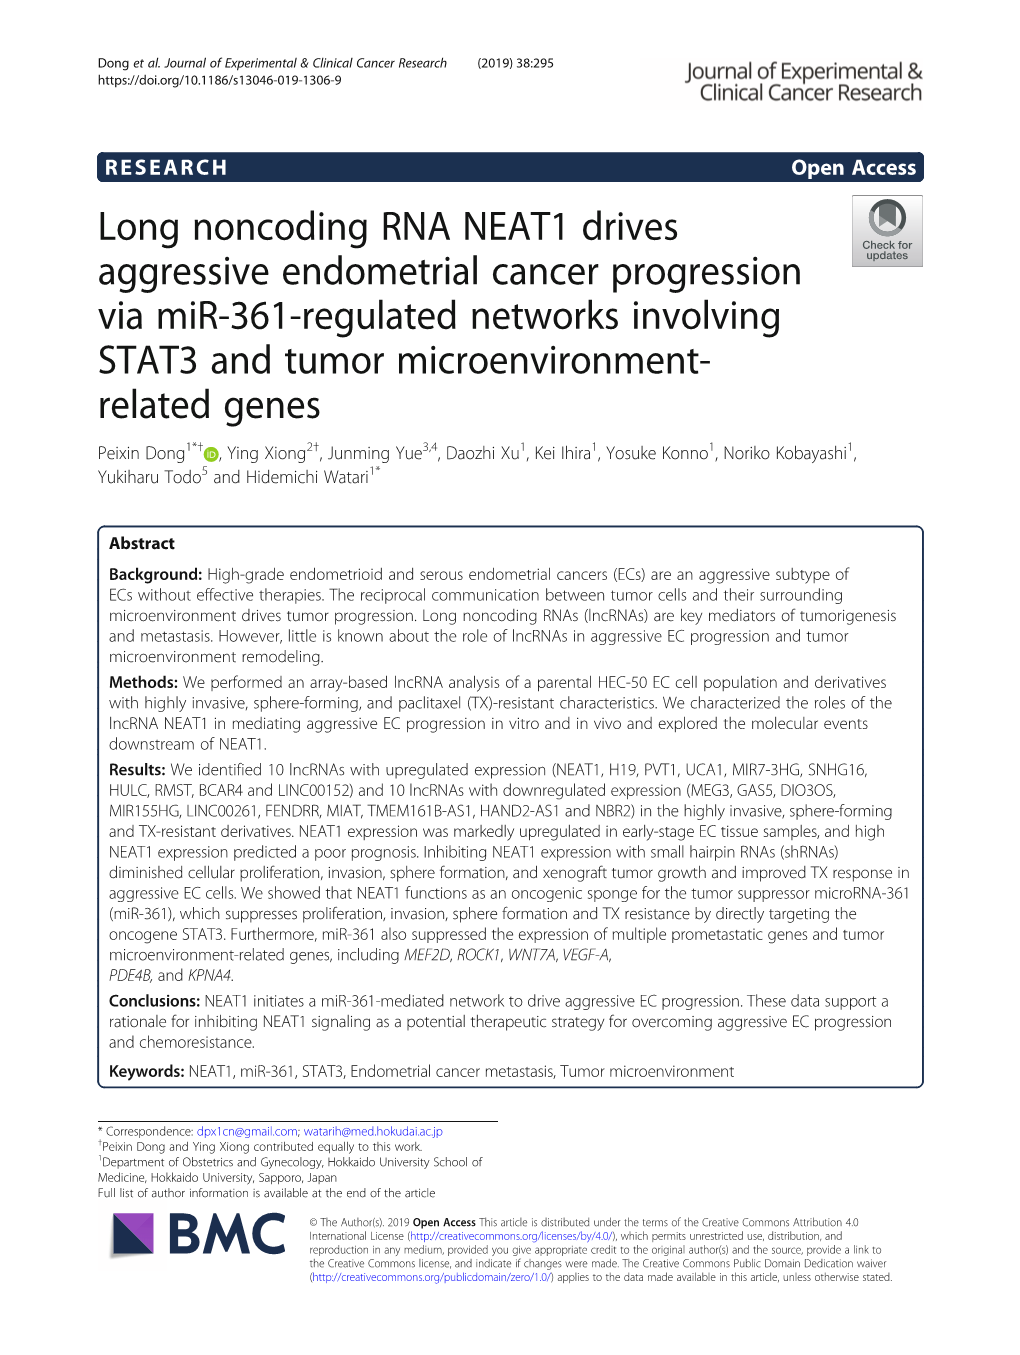 Long Noncoding RNA NEAT1 Drives Aggressive Endometrial Cancer